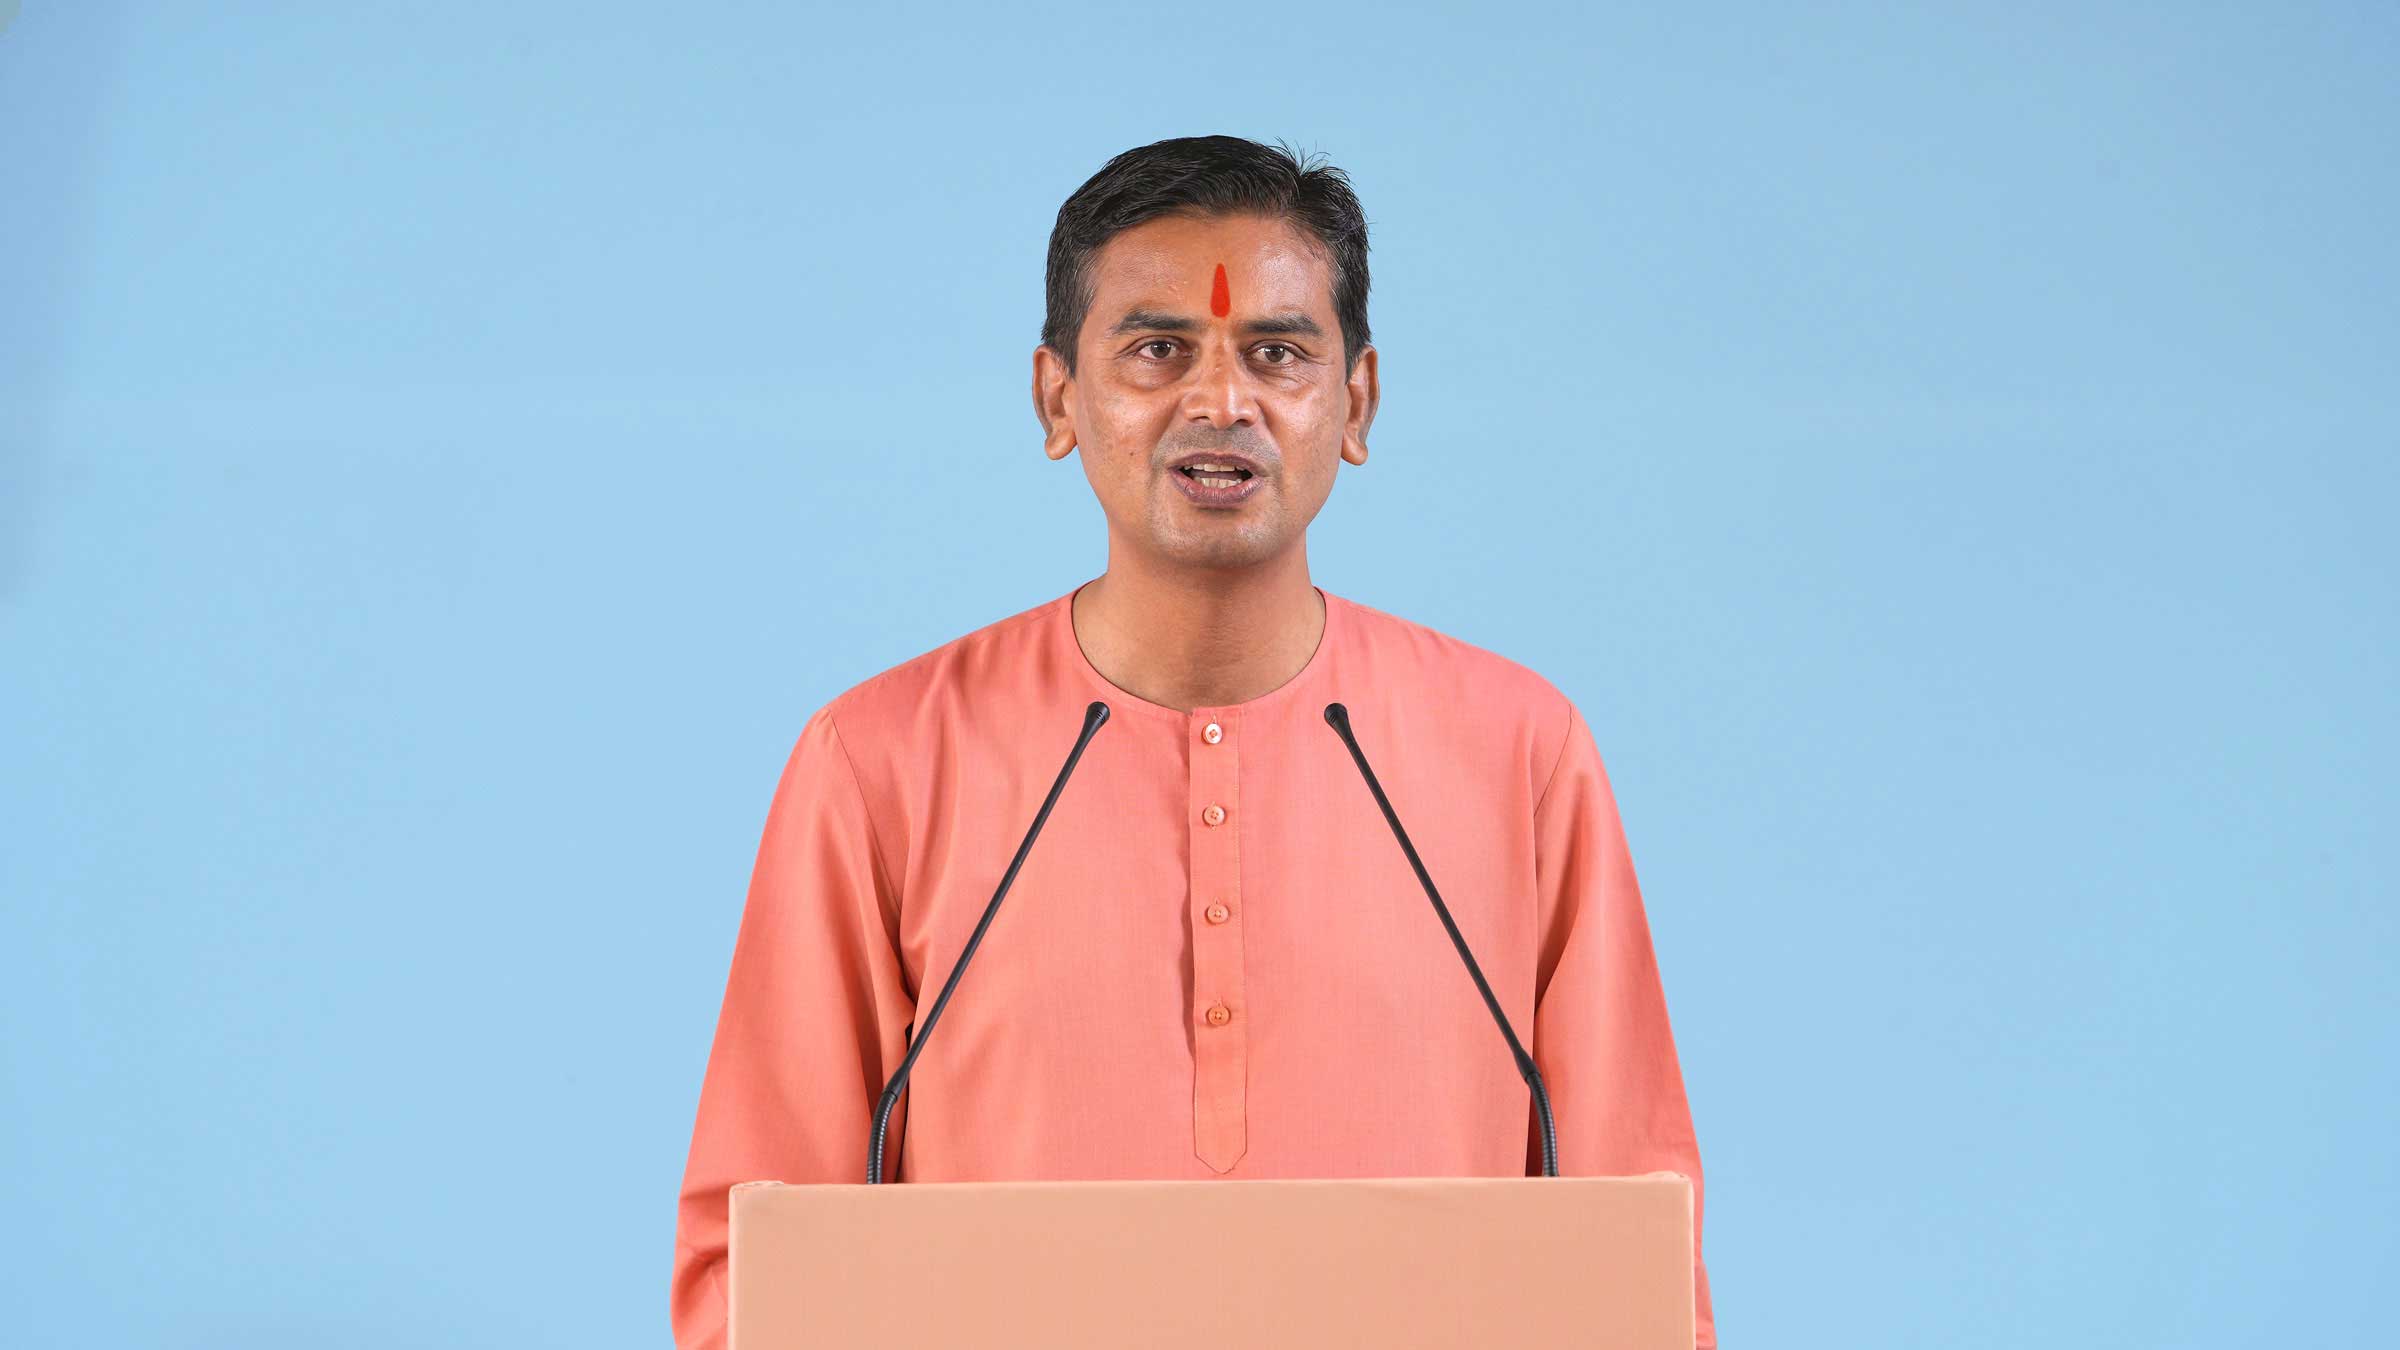 Mr Arvind Pansare (Coordinator, Publicity, Hindu Janajagruti Samiti) providing an overview of the media coverage of the ‘Vaishvik Hindu Rashtra Mahotsav’